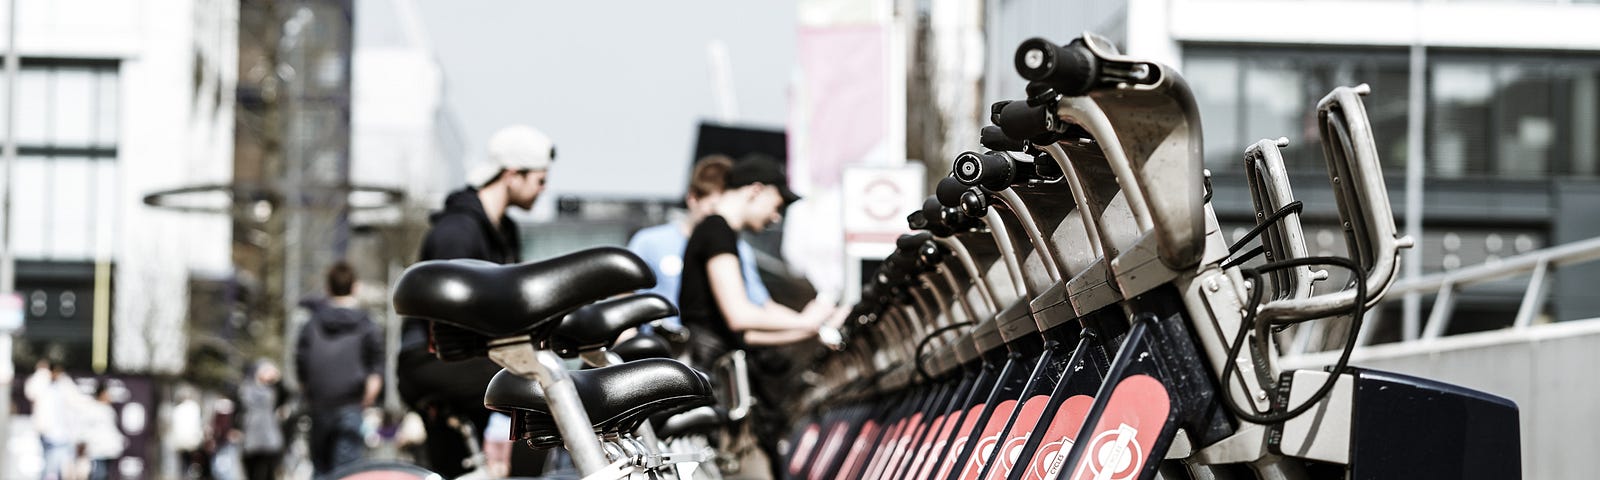 Santander bikes in London